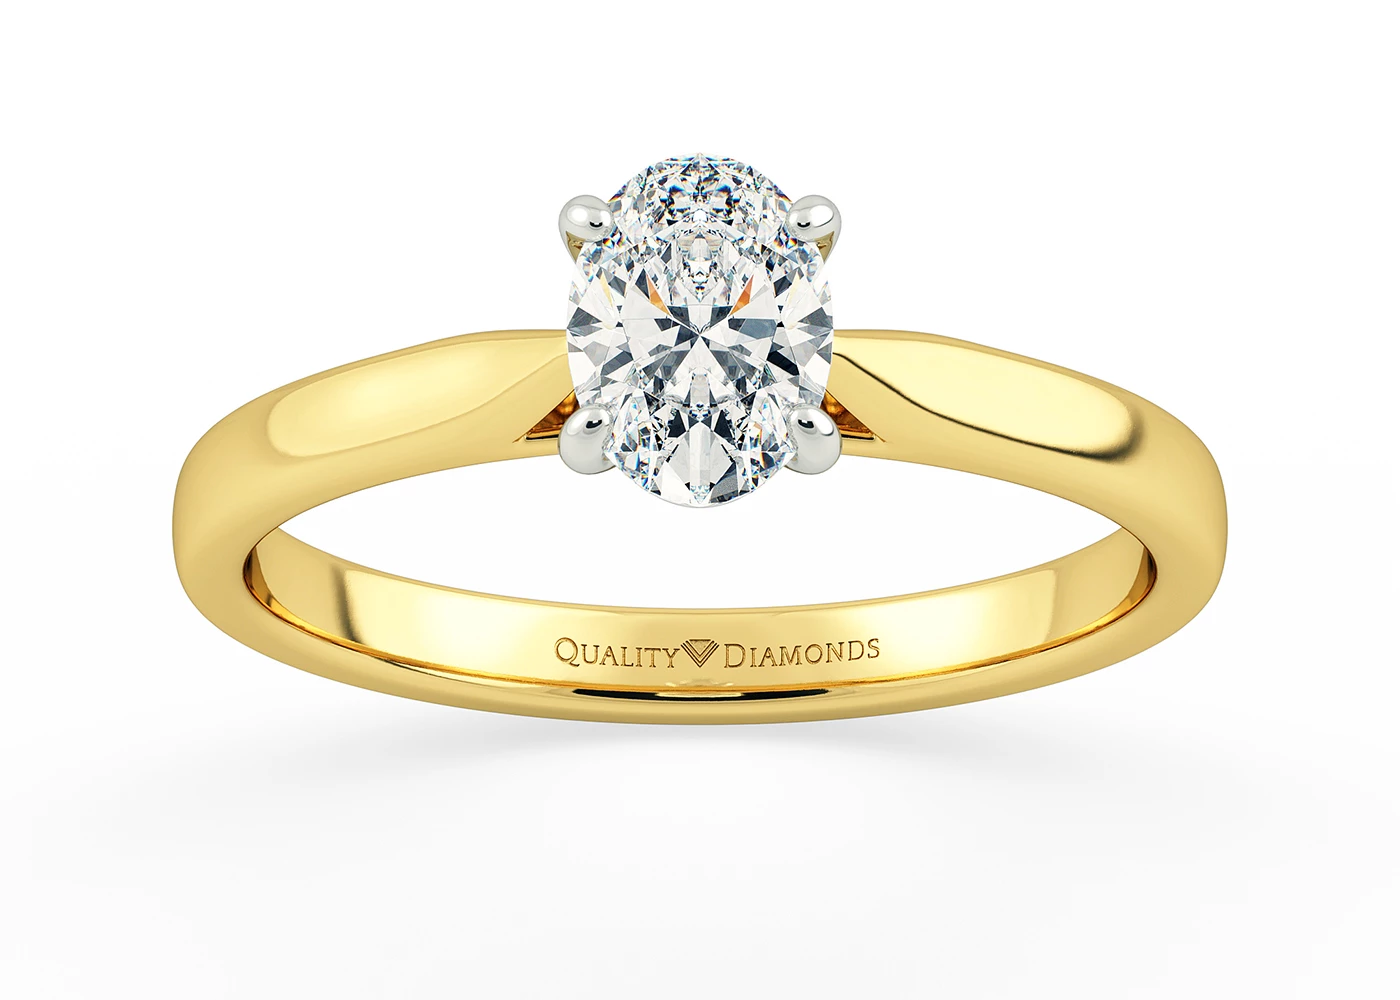 Oval Clara Diamond Ring in 9K Yellow Gold